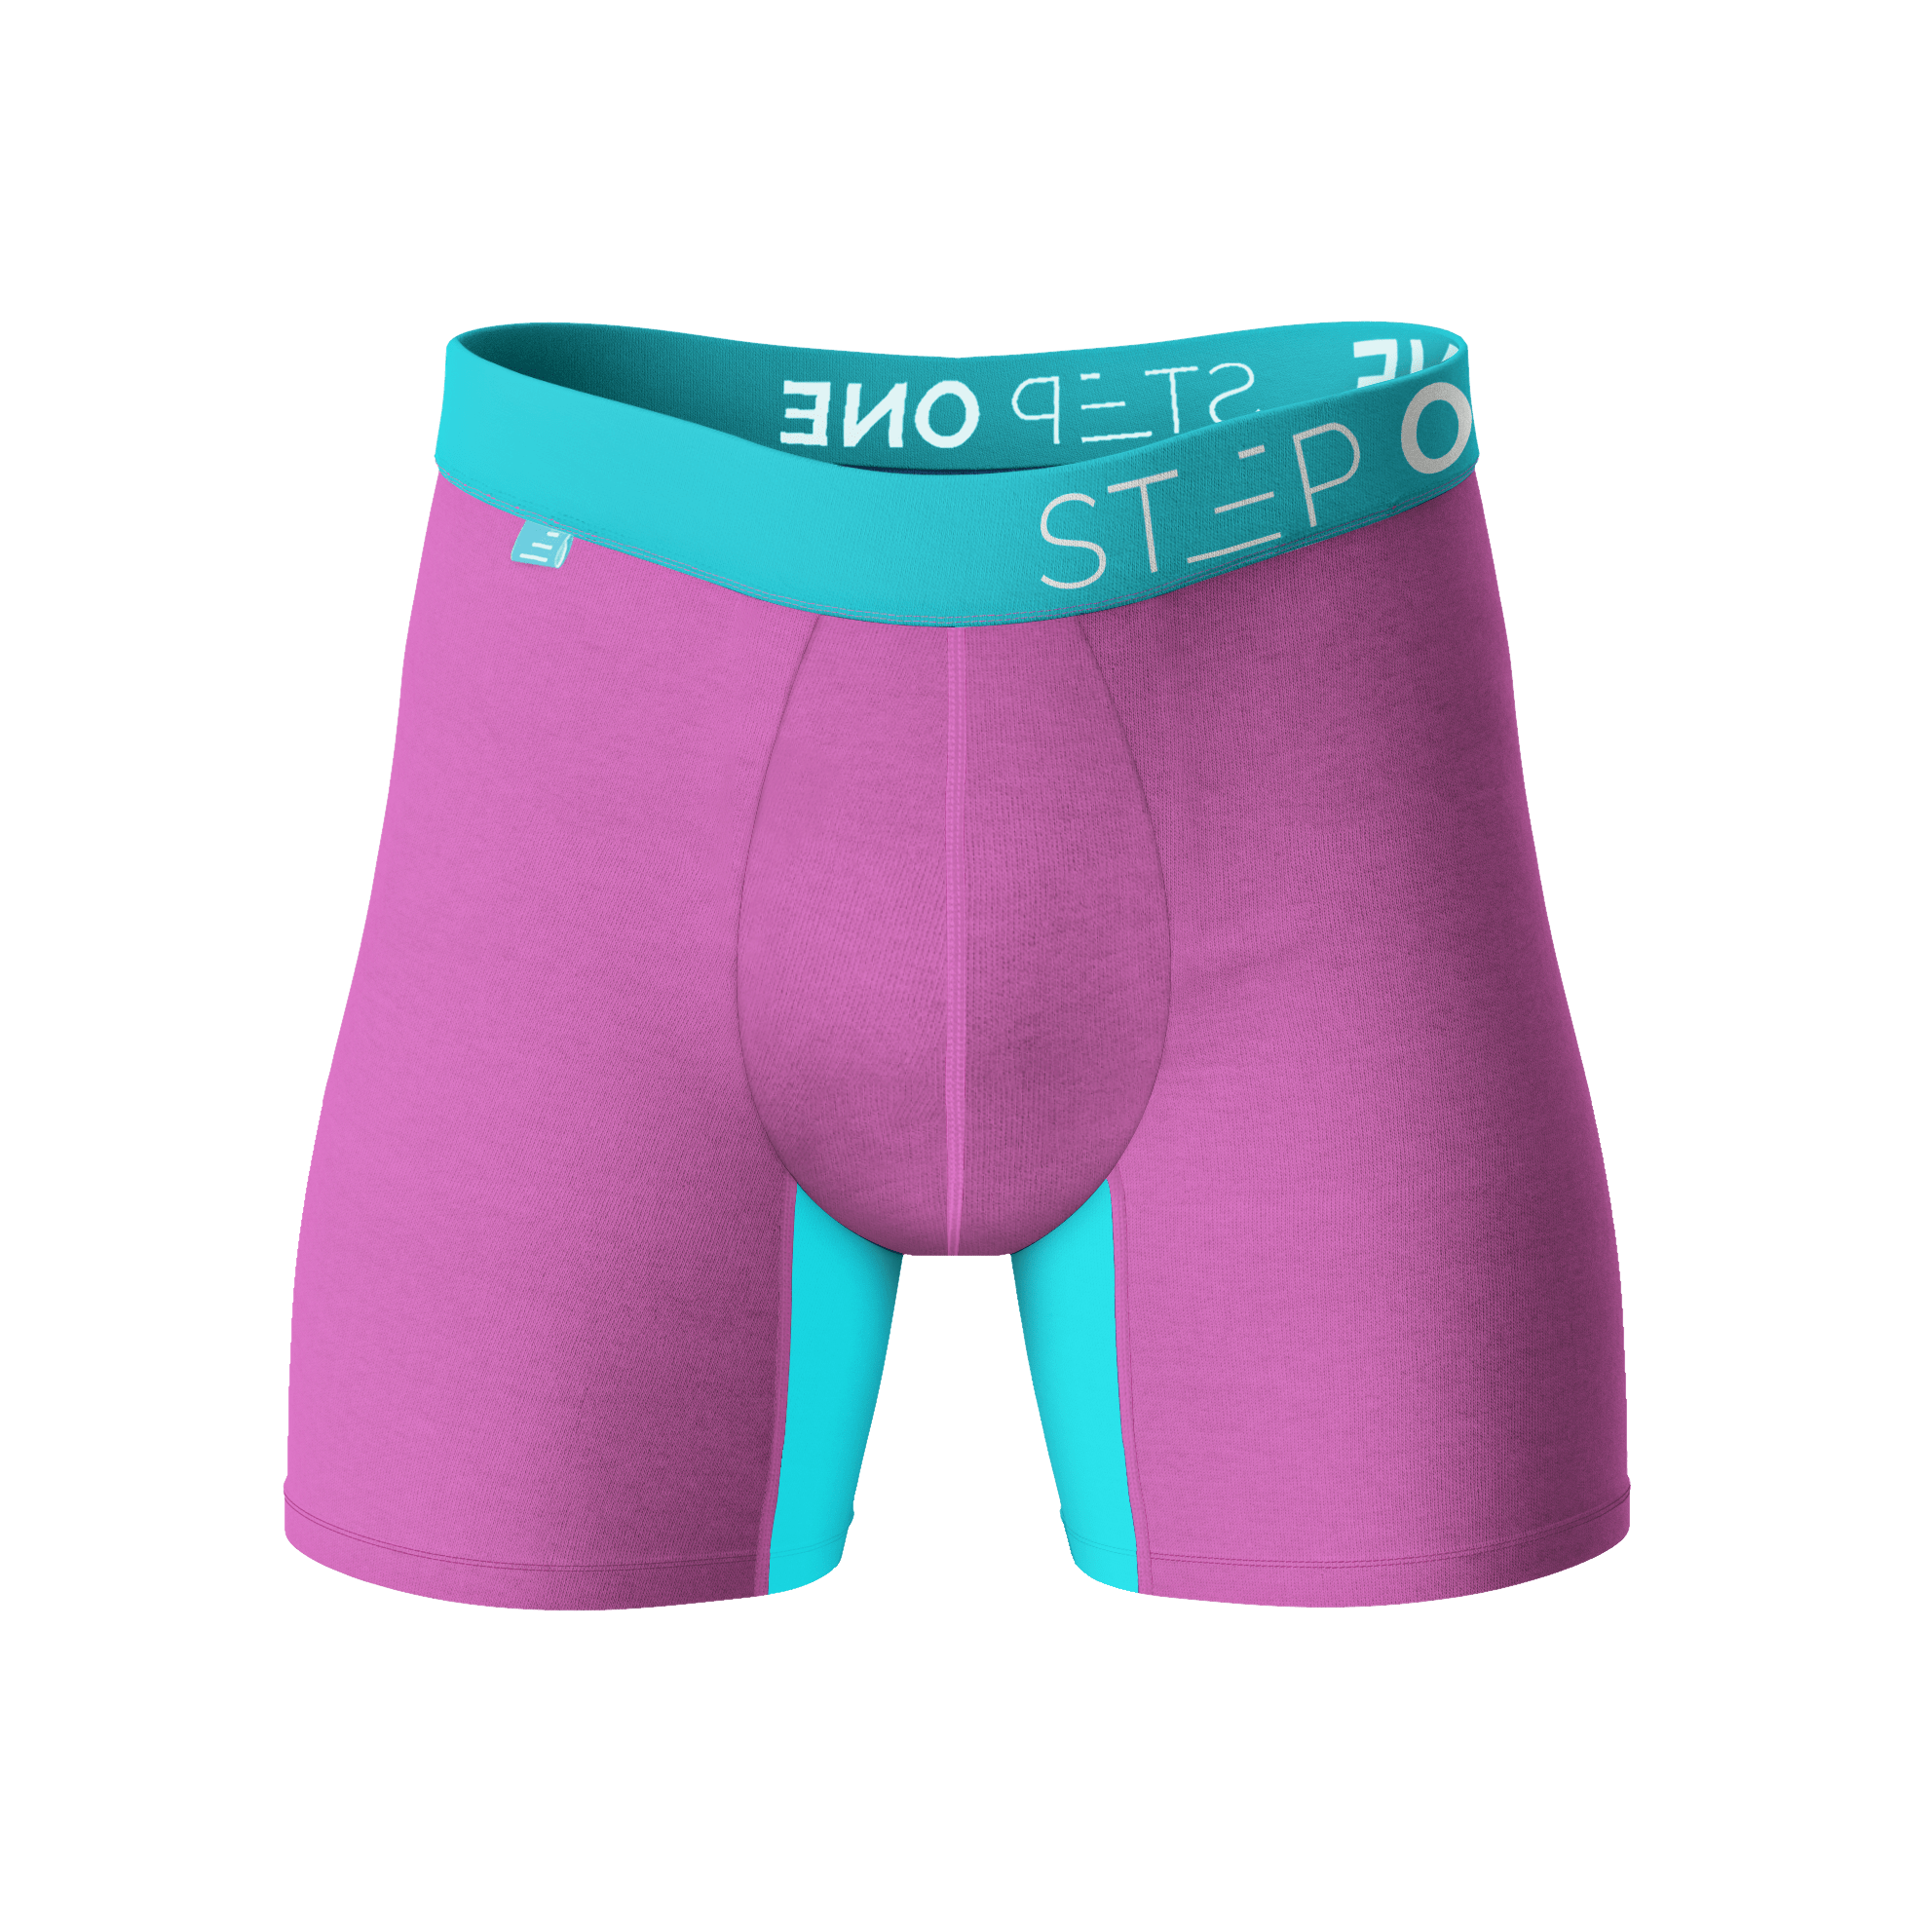 Boxer Brief - Juicy Plums  Step One Men's Underwear US